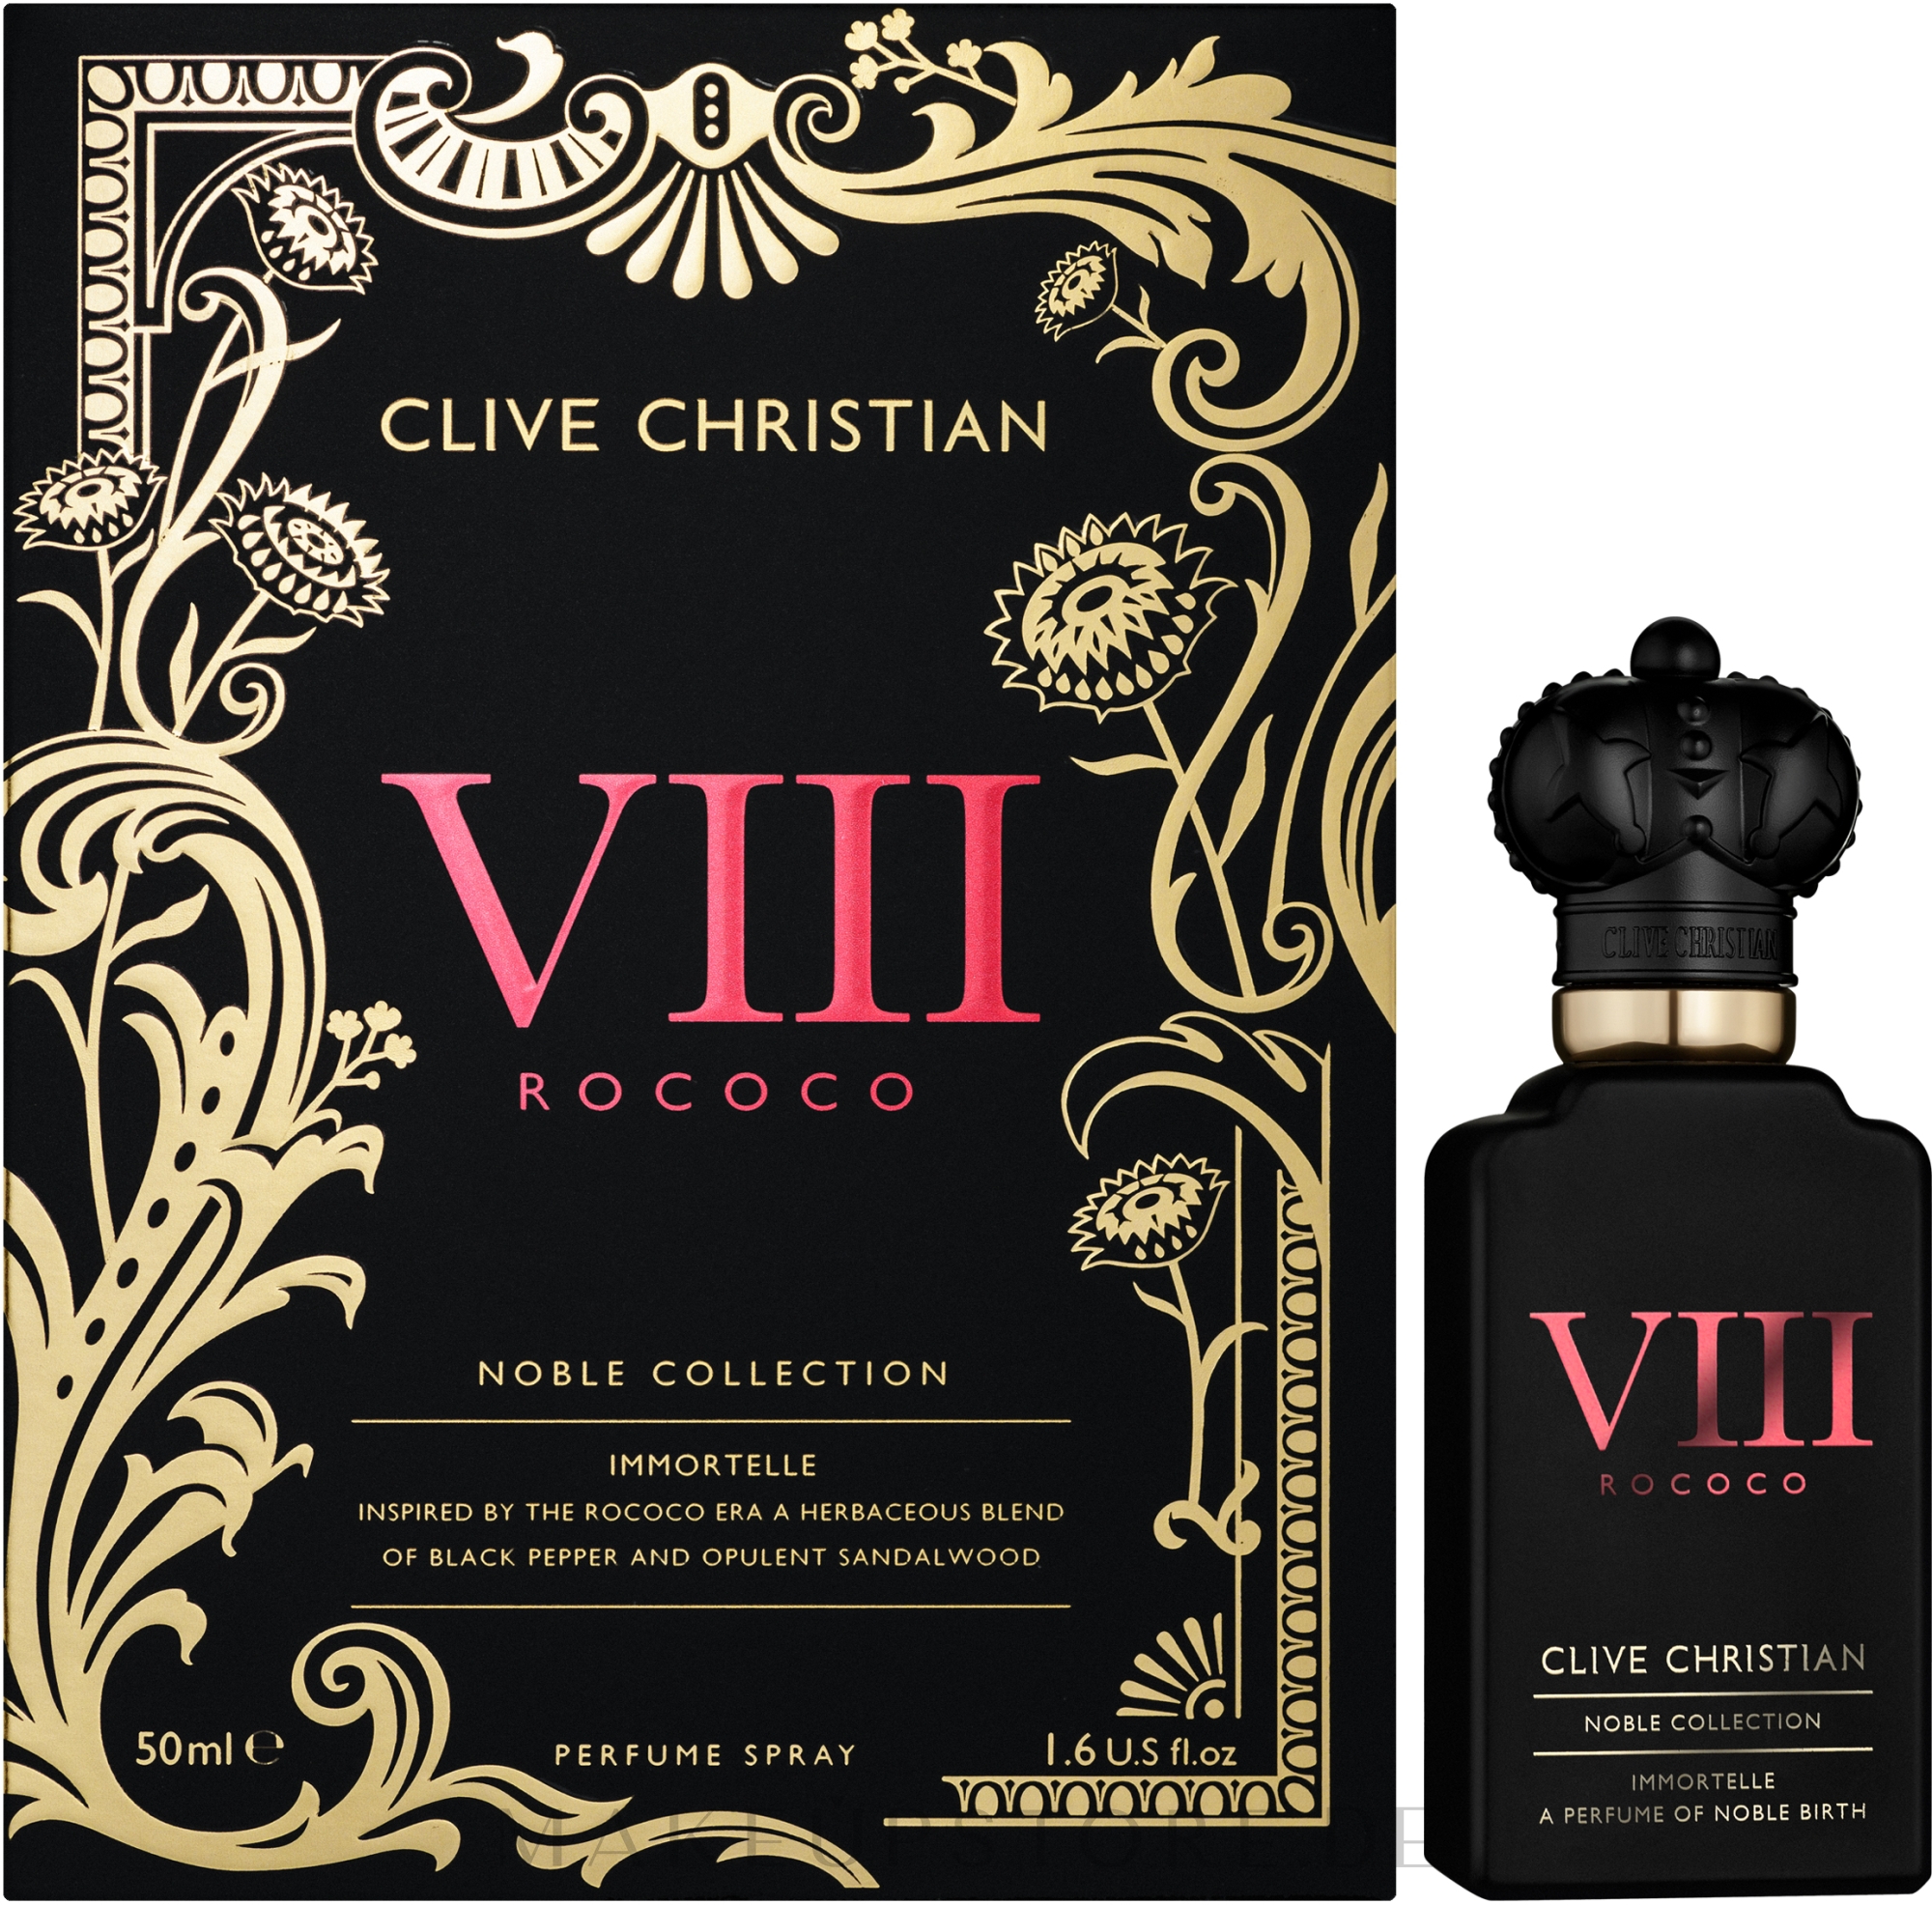 Clive Christian Noble Collection VIII Rococo Magnolia Eau de Parfum Abfüllung 5 ml